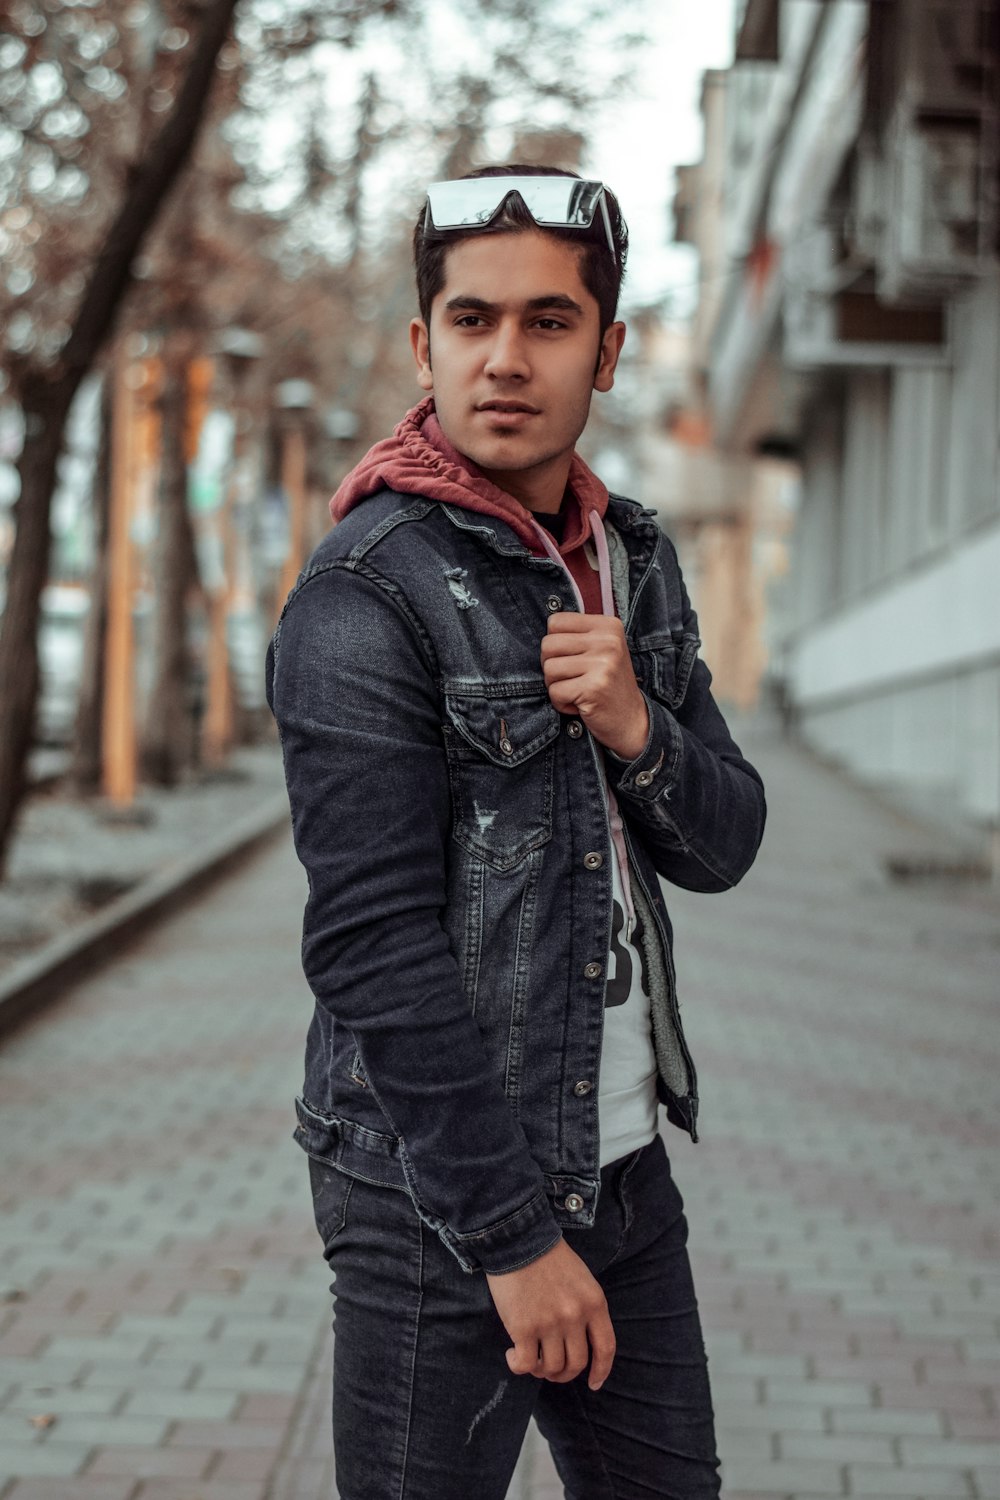 Man in black denim jacket on bricked pavement photo – Free Iranian people  Image on Unsplash